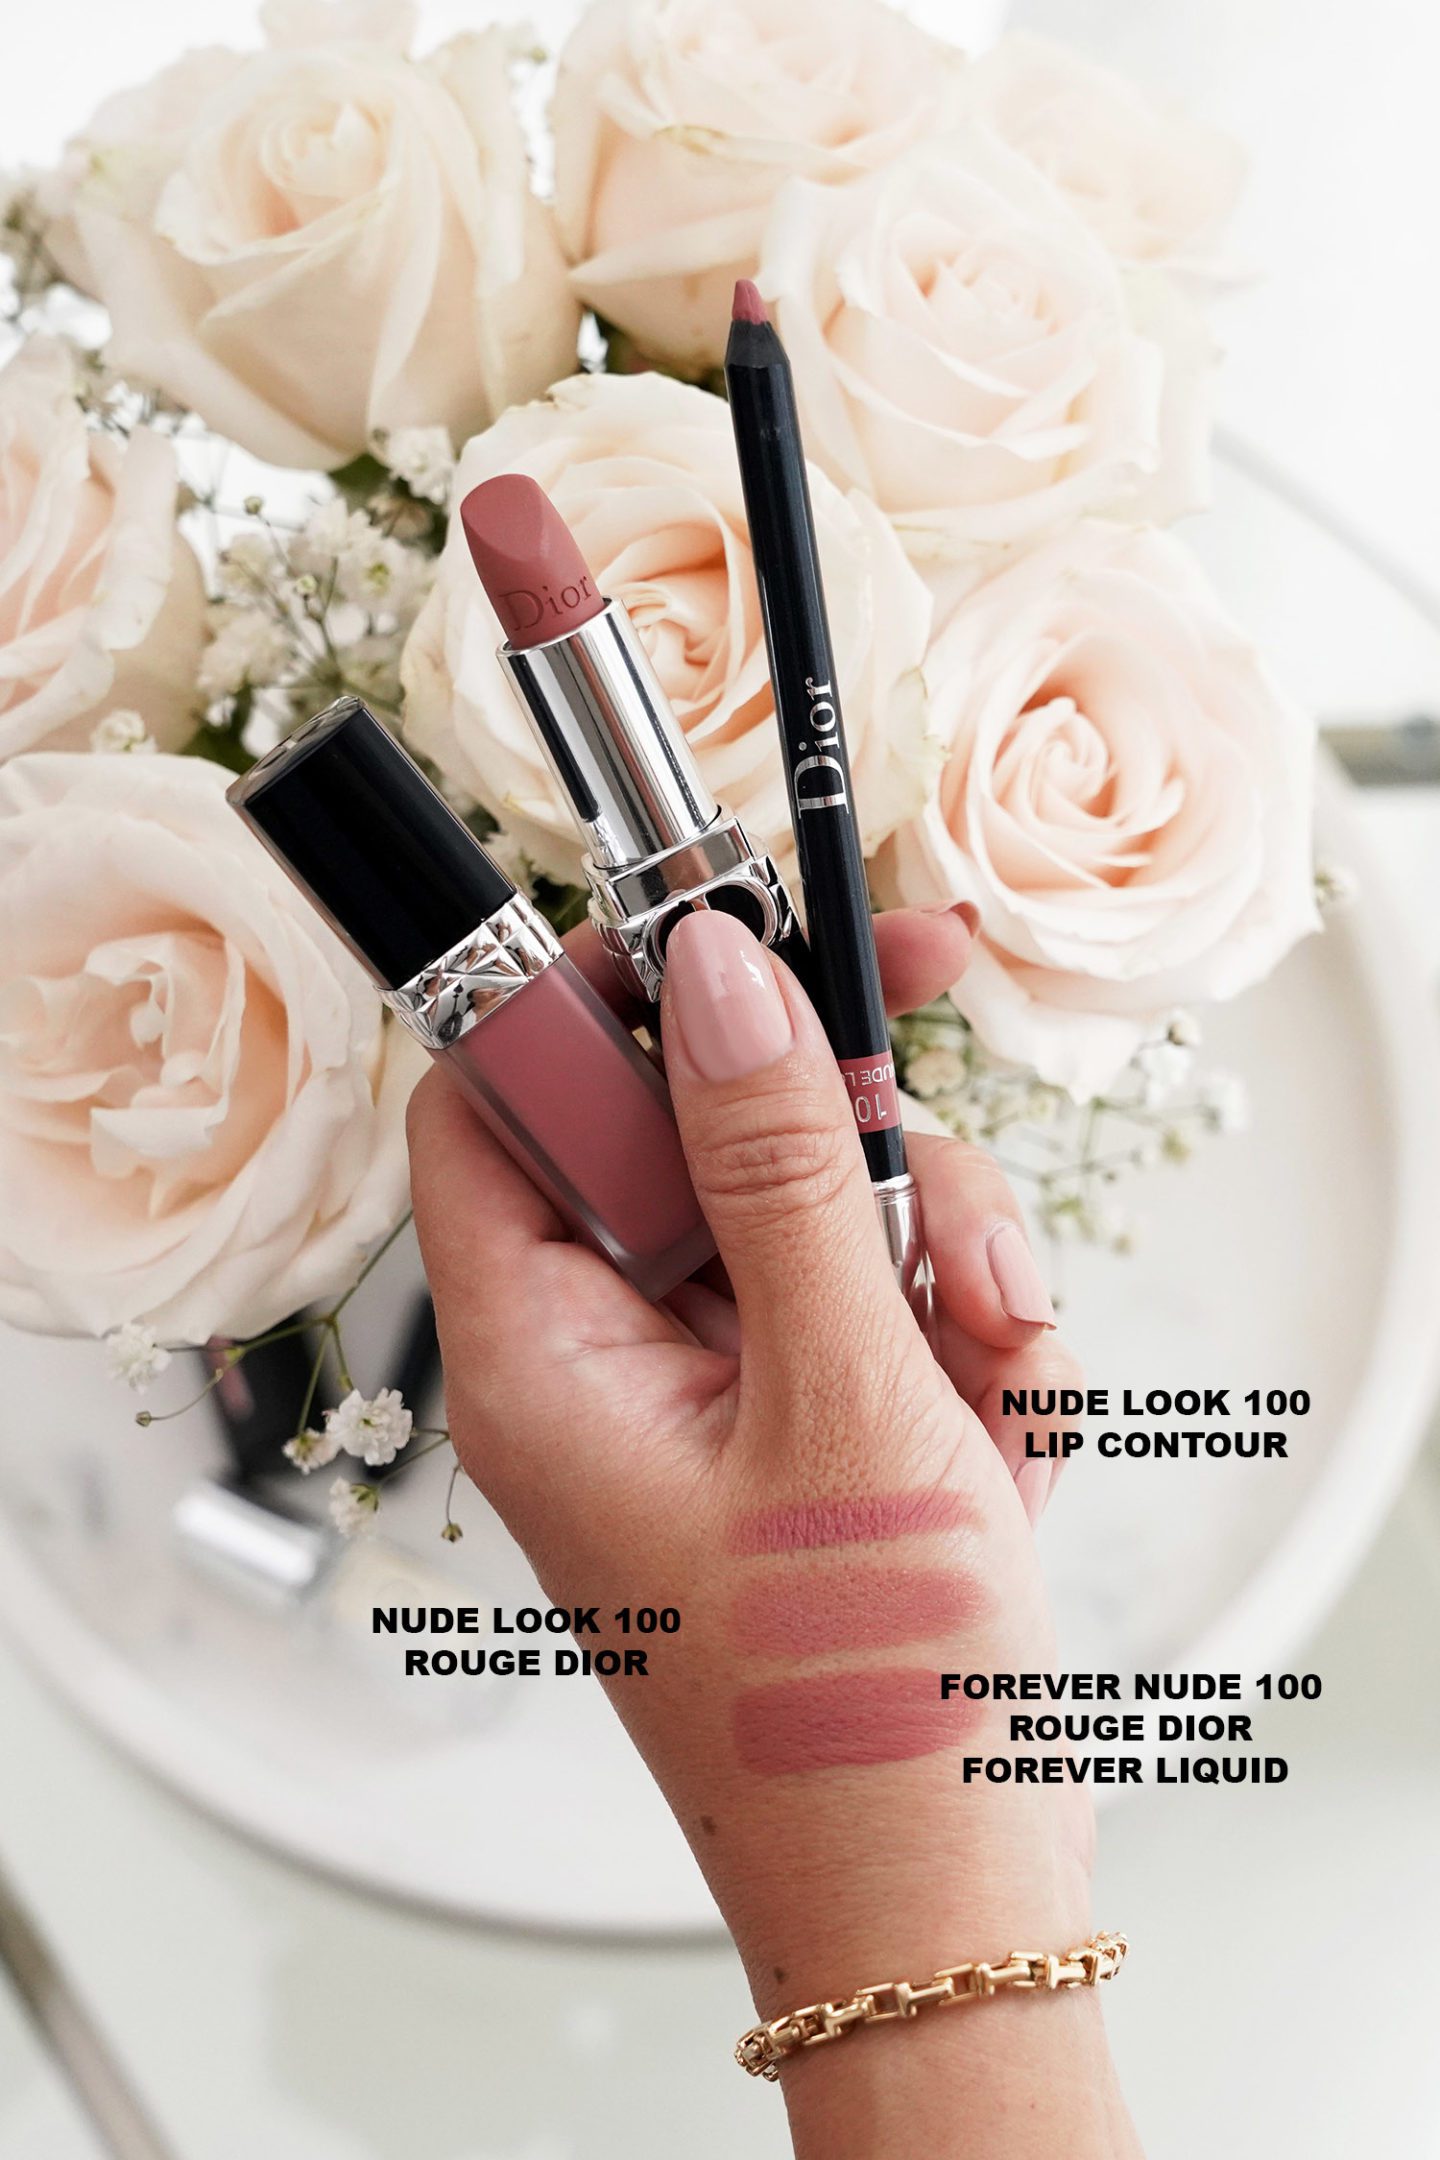 Dior Nude Look 100 Lipstick, Lipliner, Forever Liquid in Forever Nude 100